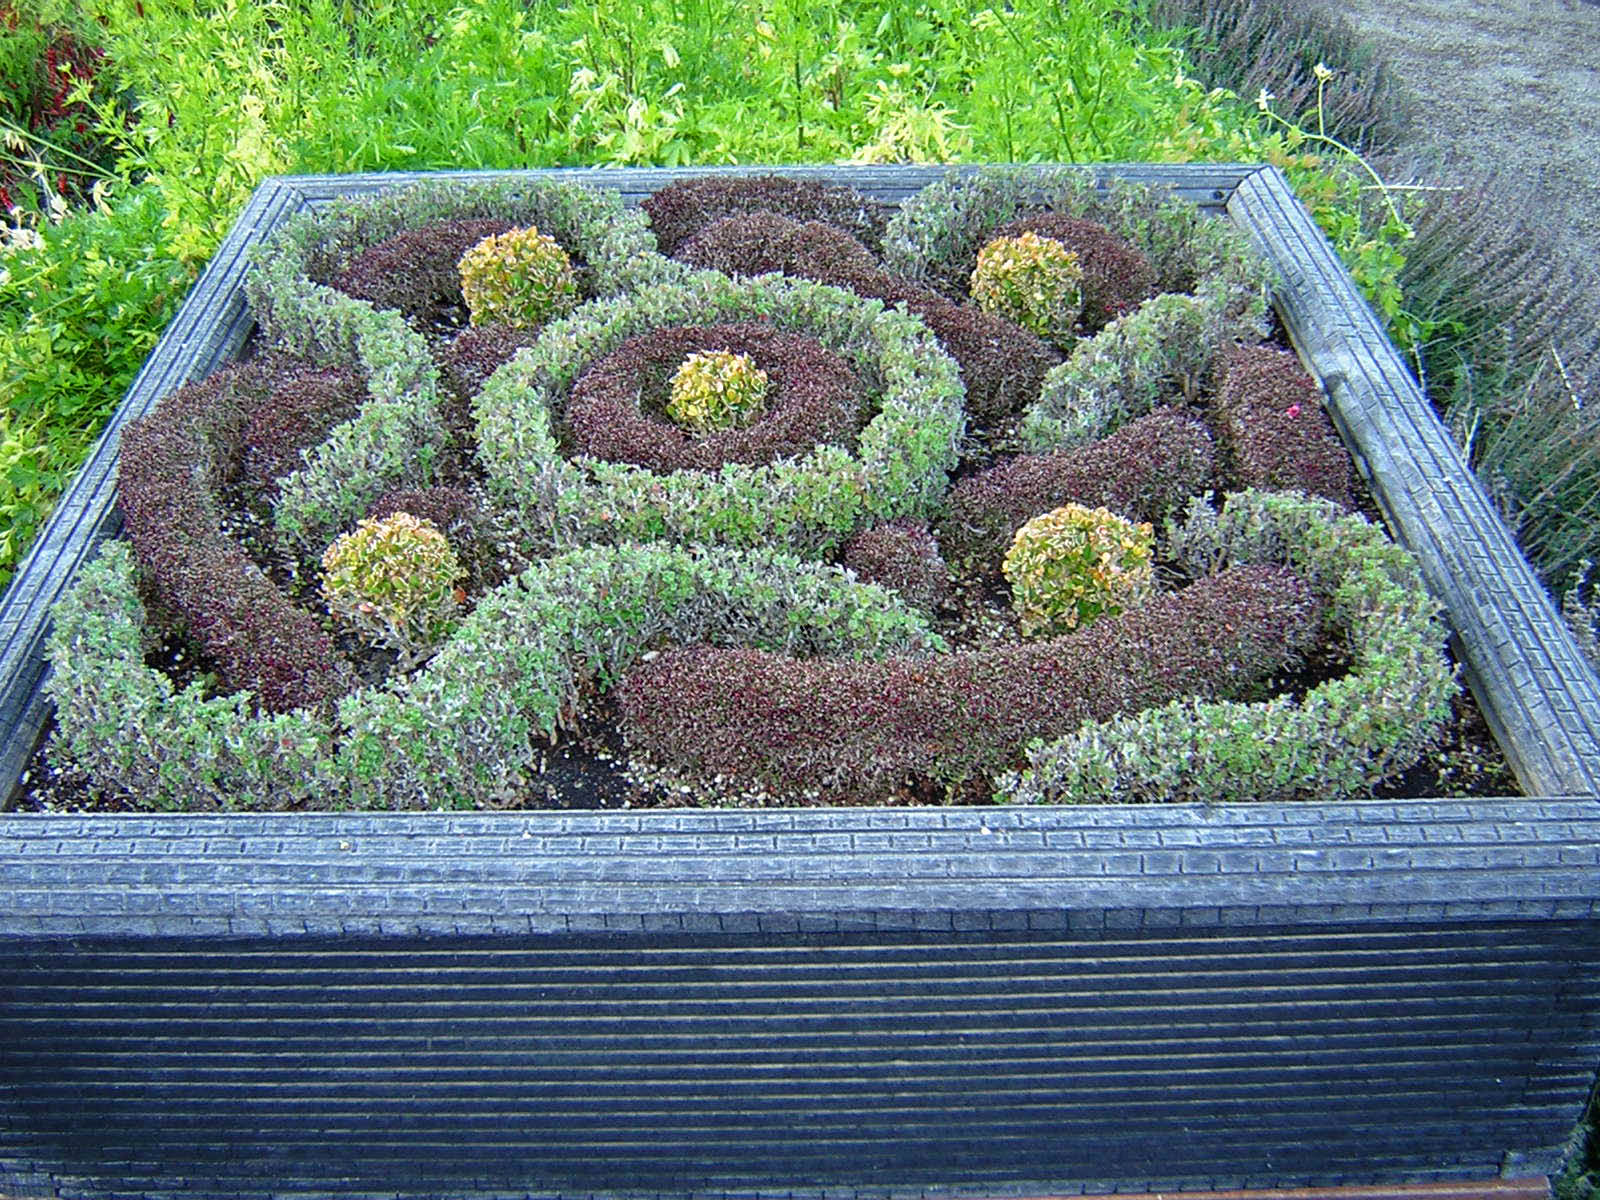 650 New topiary knot garden 465 Miniature tabletop knot garden at Filoli 